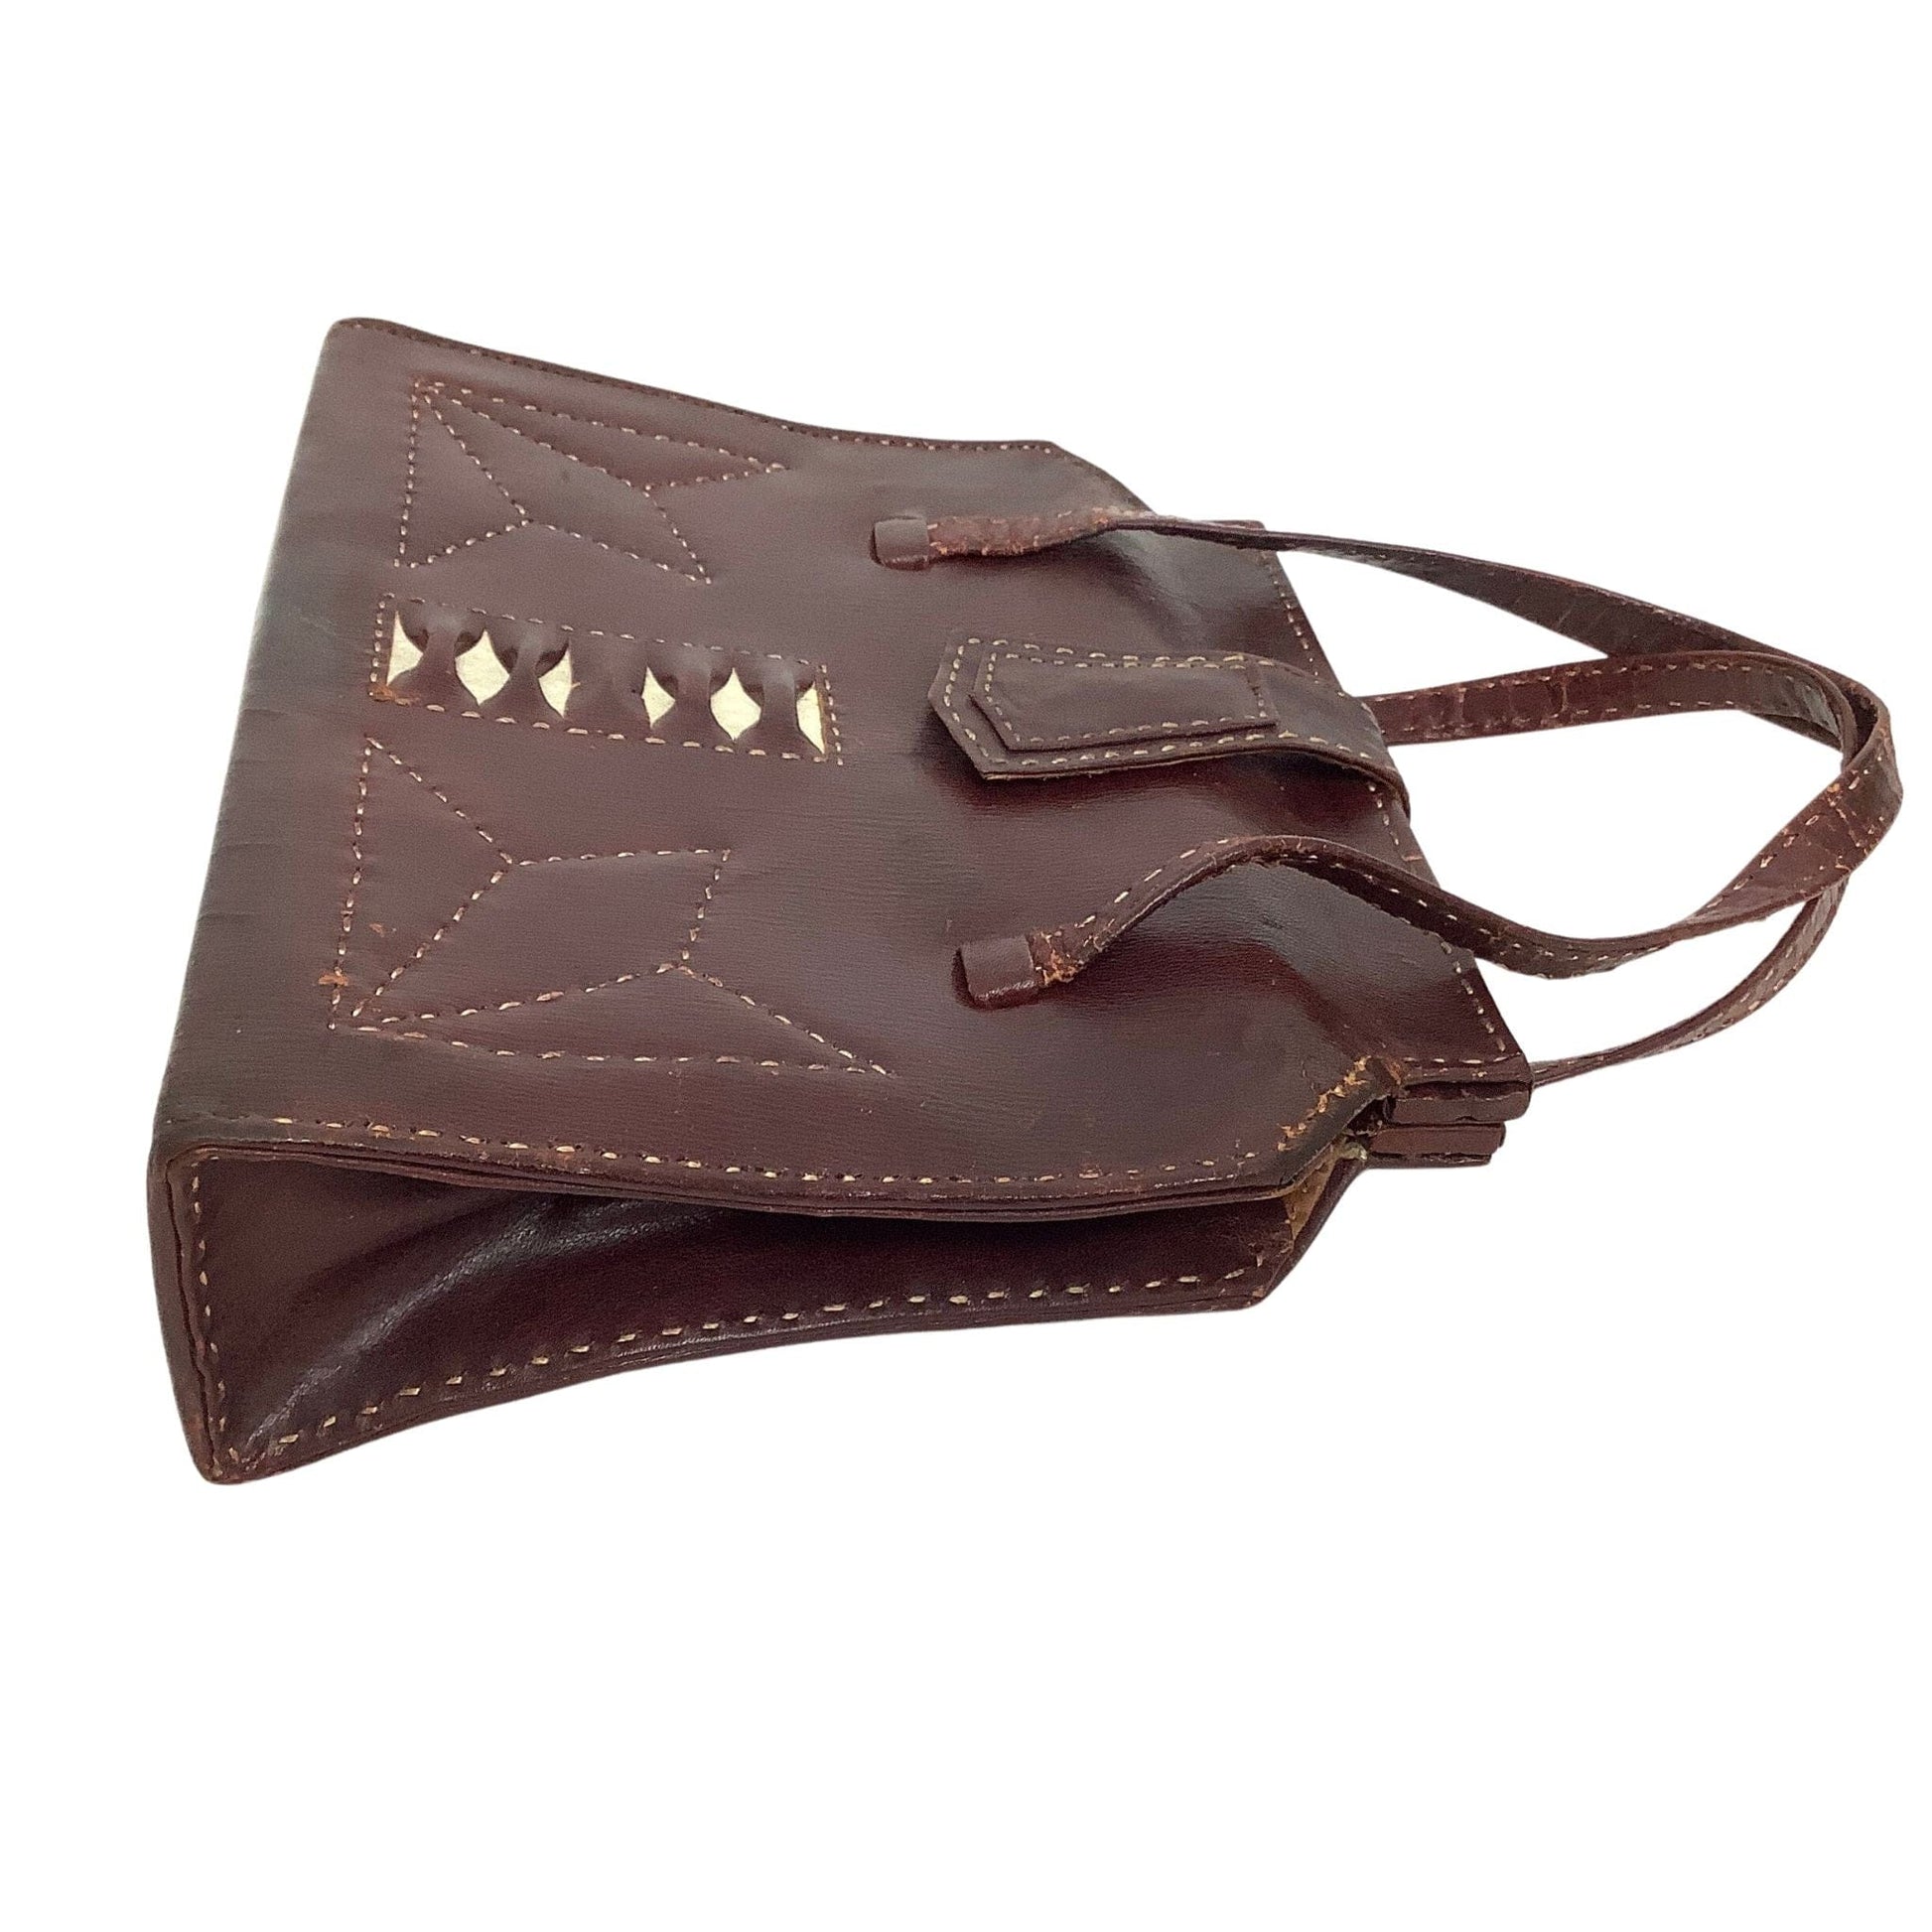 1940s Vintage Handbag Brown / Leather / Vintage 1940s